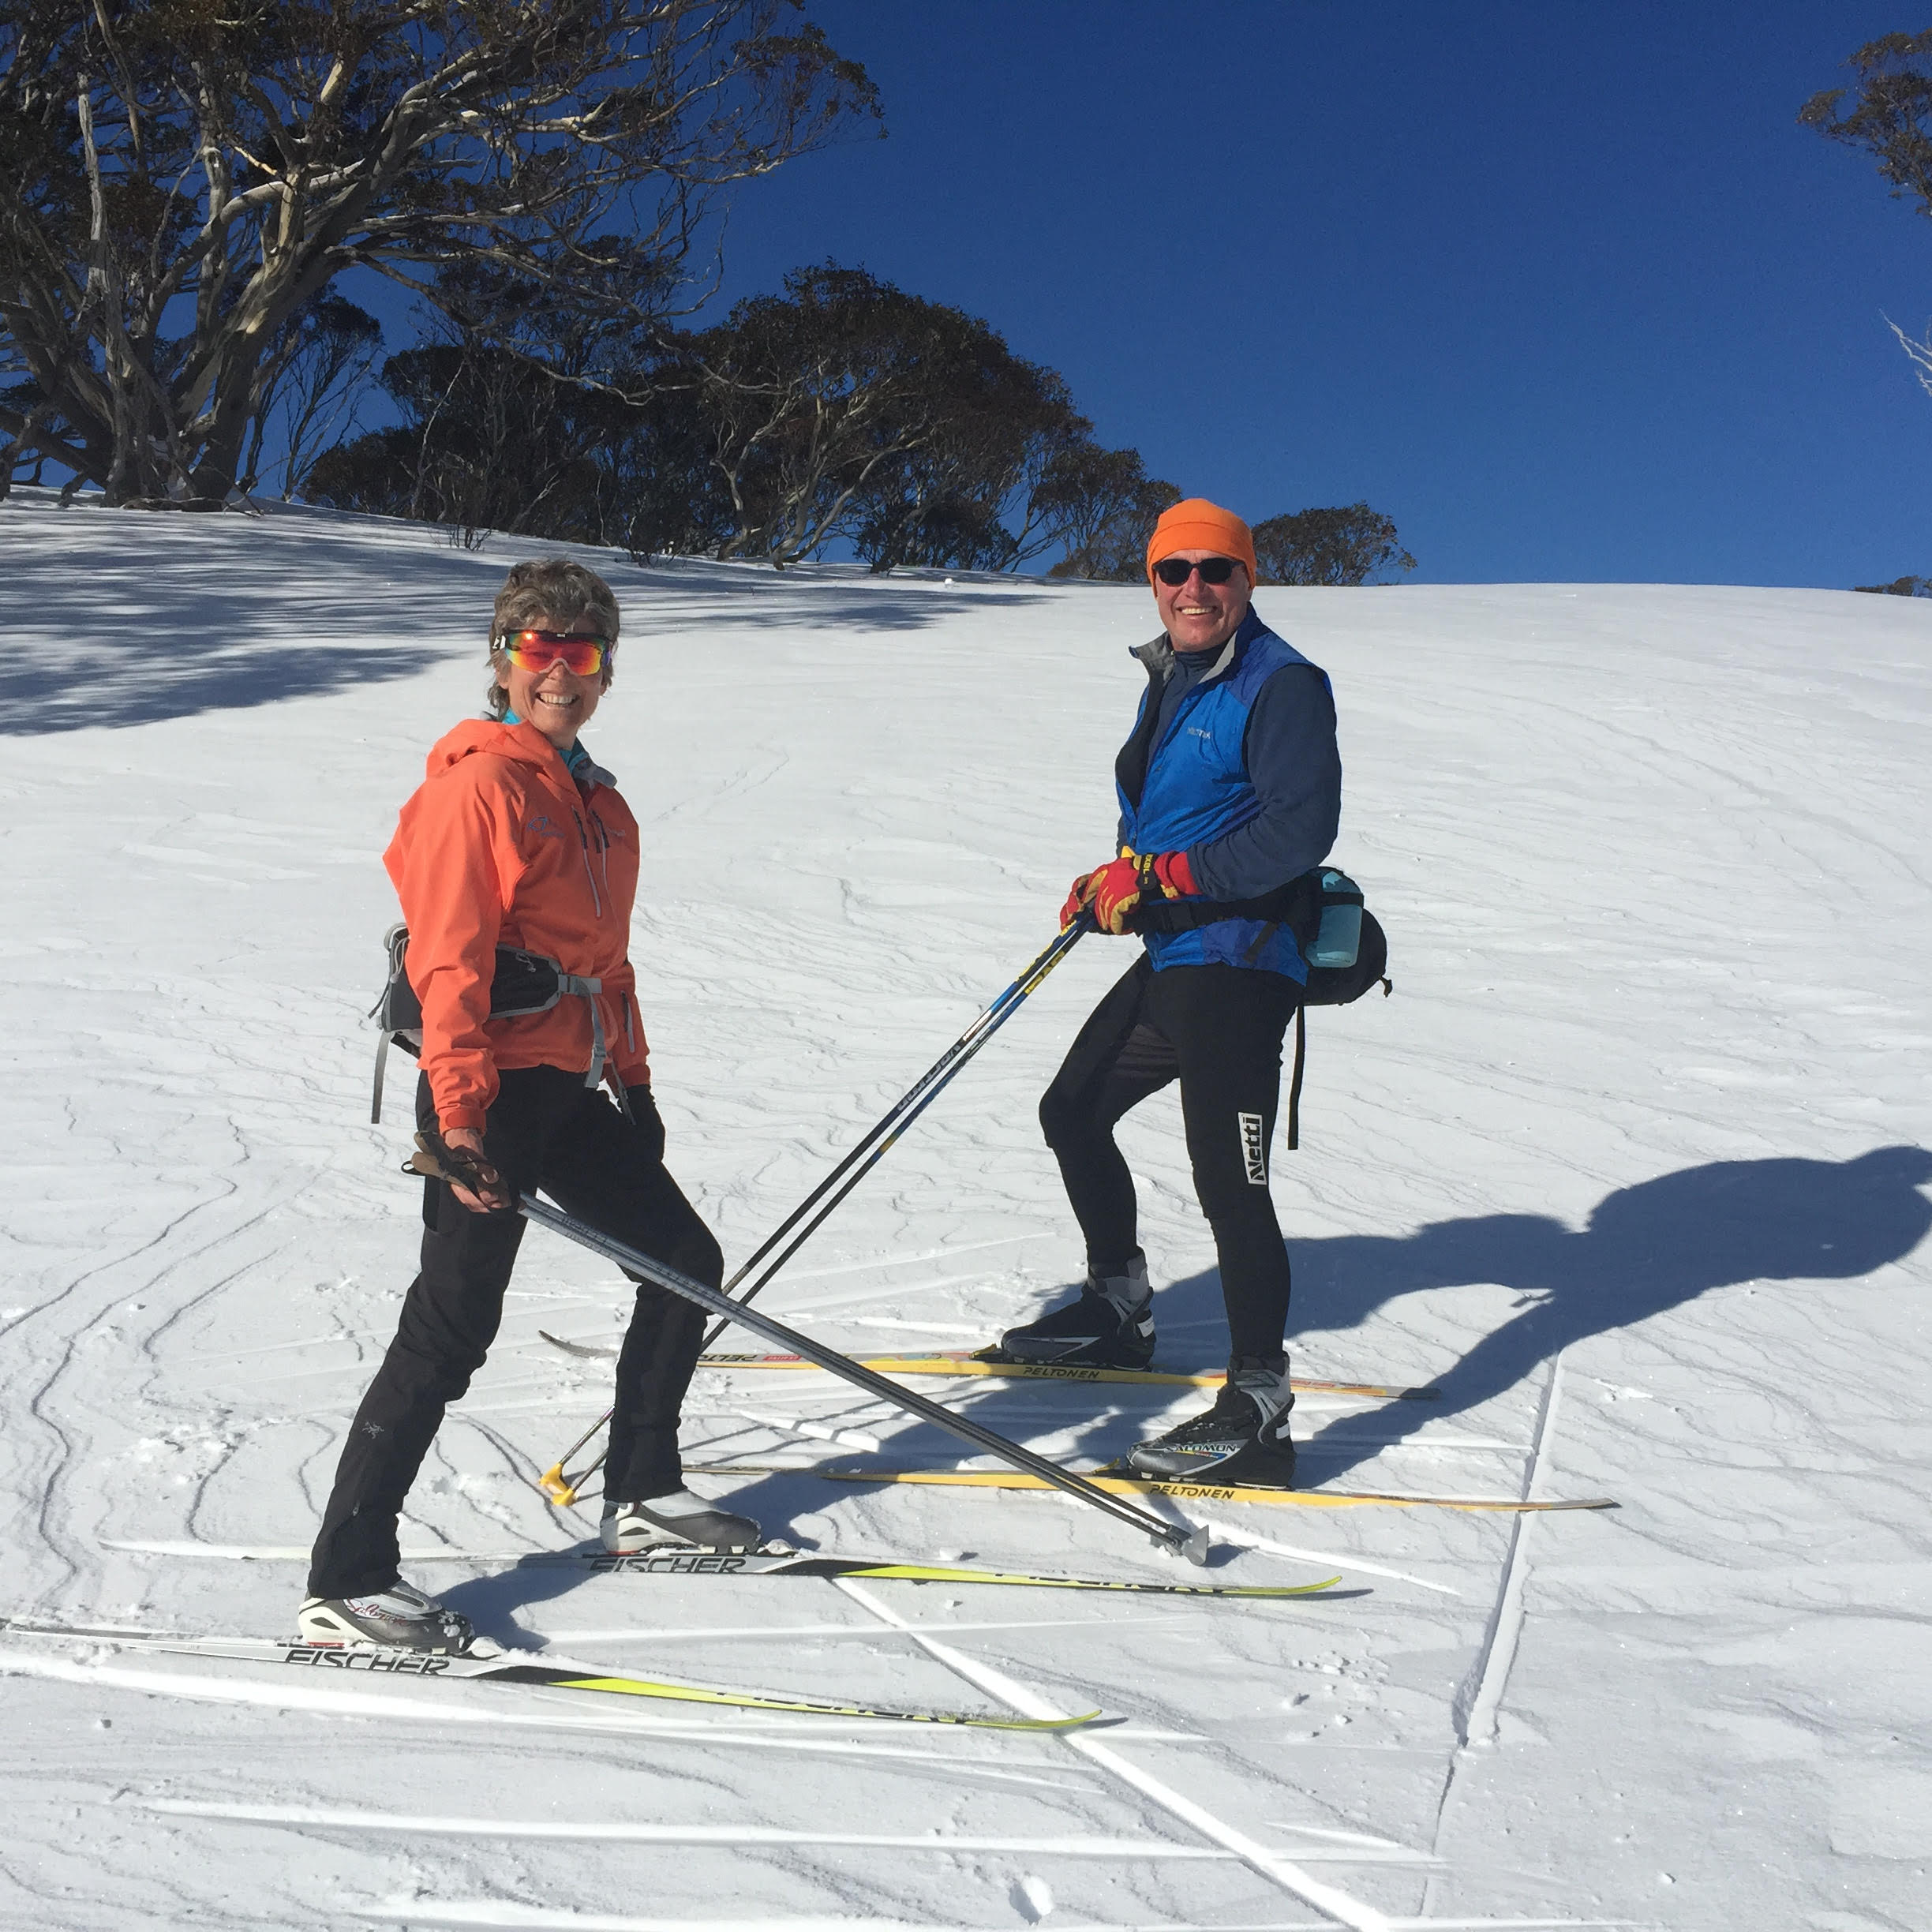 Backcounty operators given go-ahead for upcoming ski season